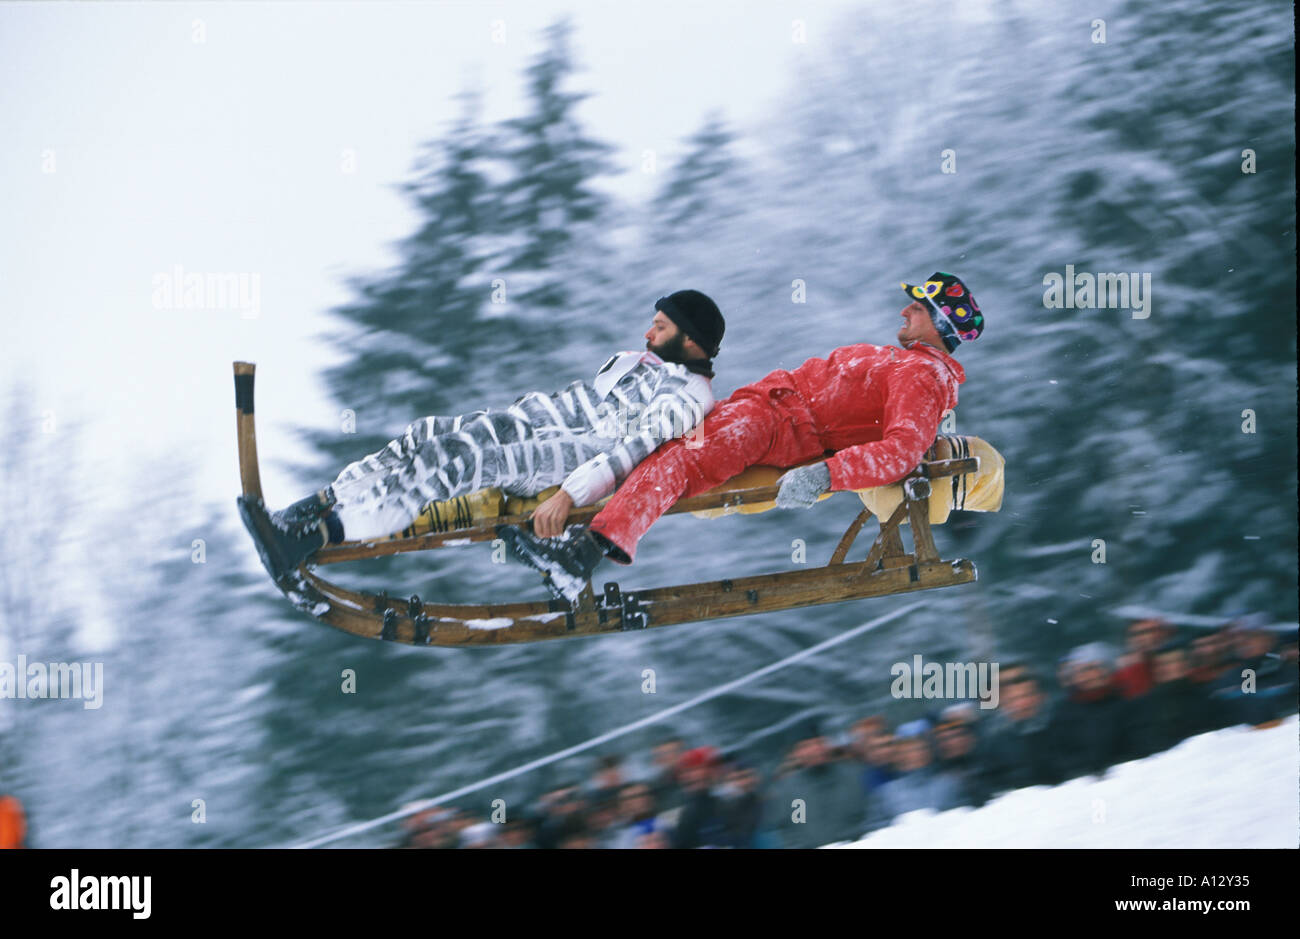 Schnablerrennen in Gaissach sledge racing Upper Bavaria Germany Stock Photo